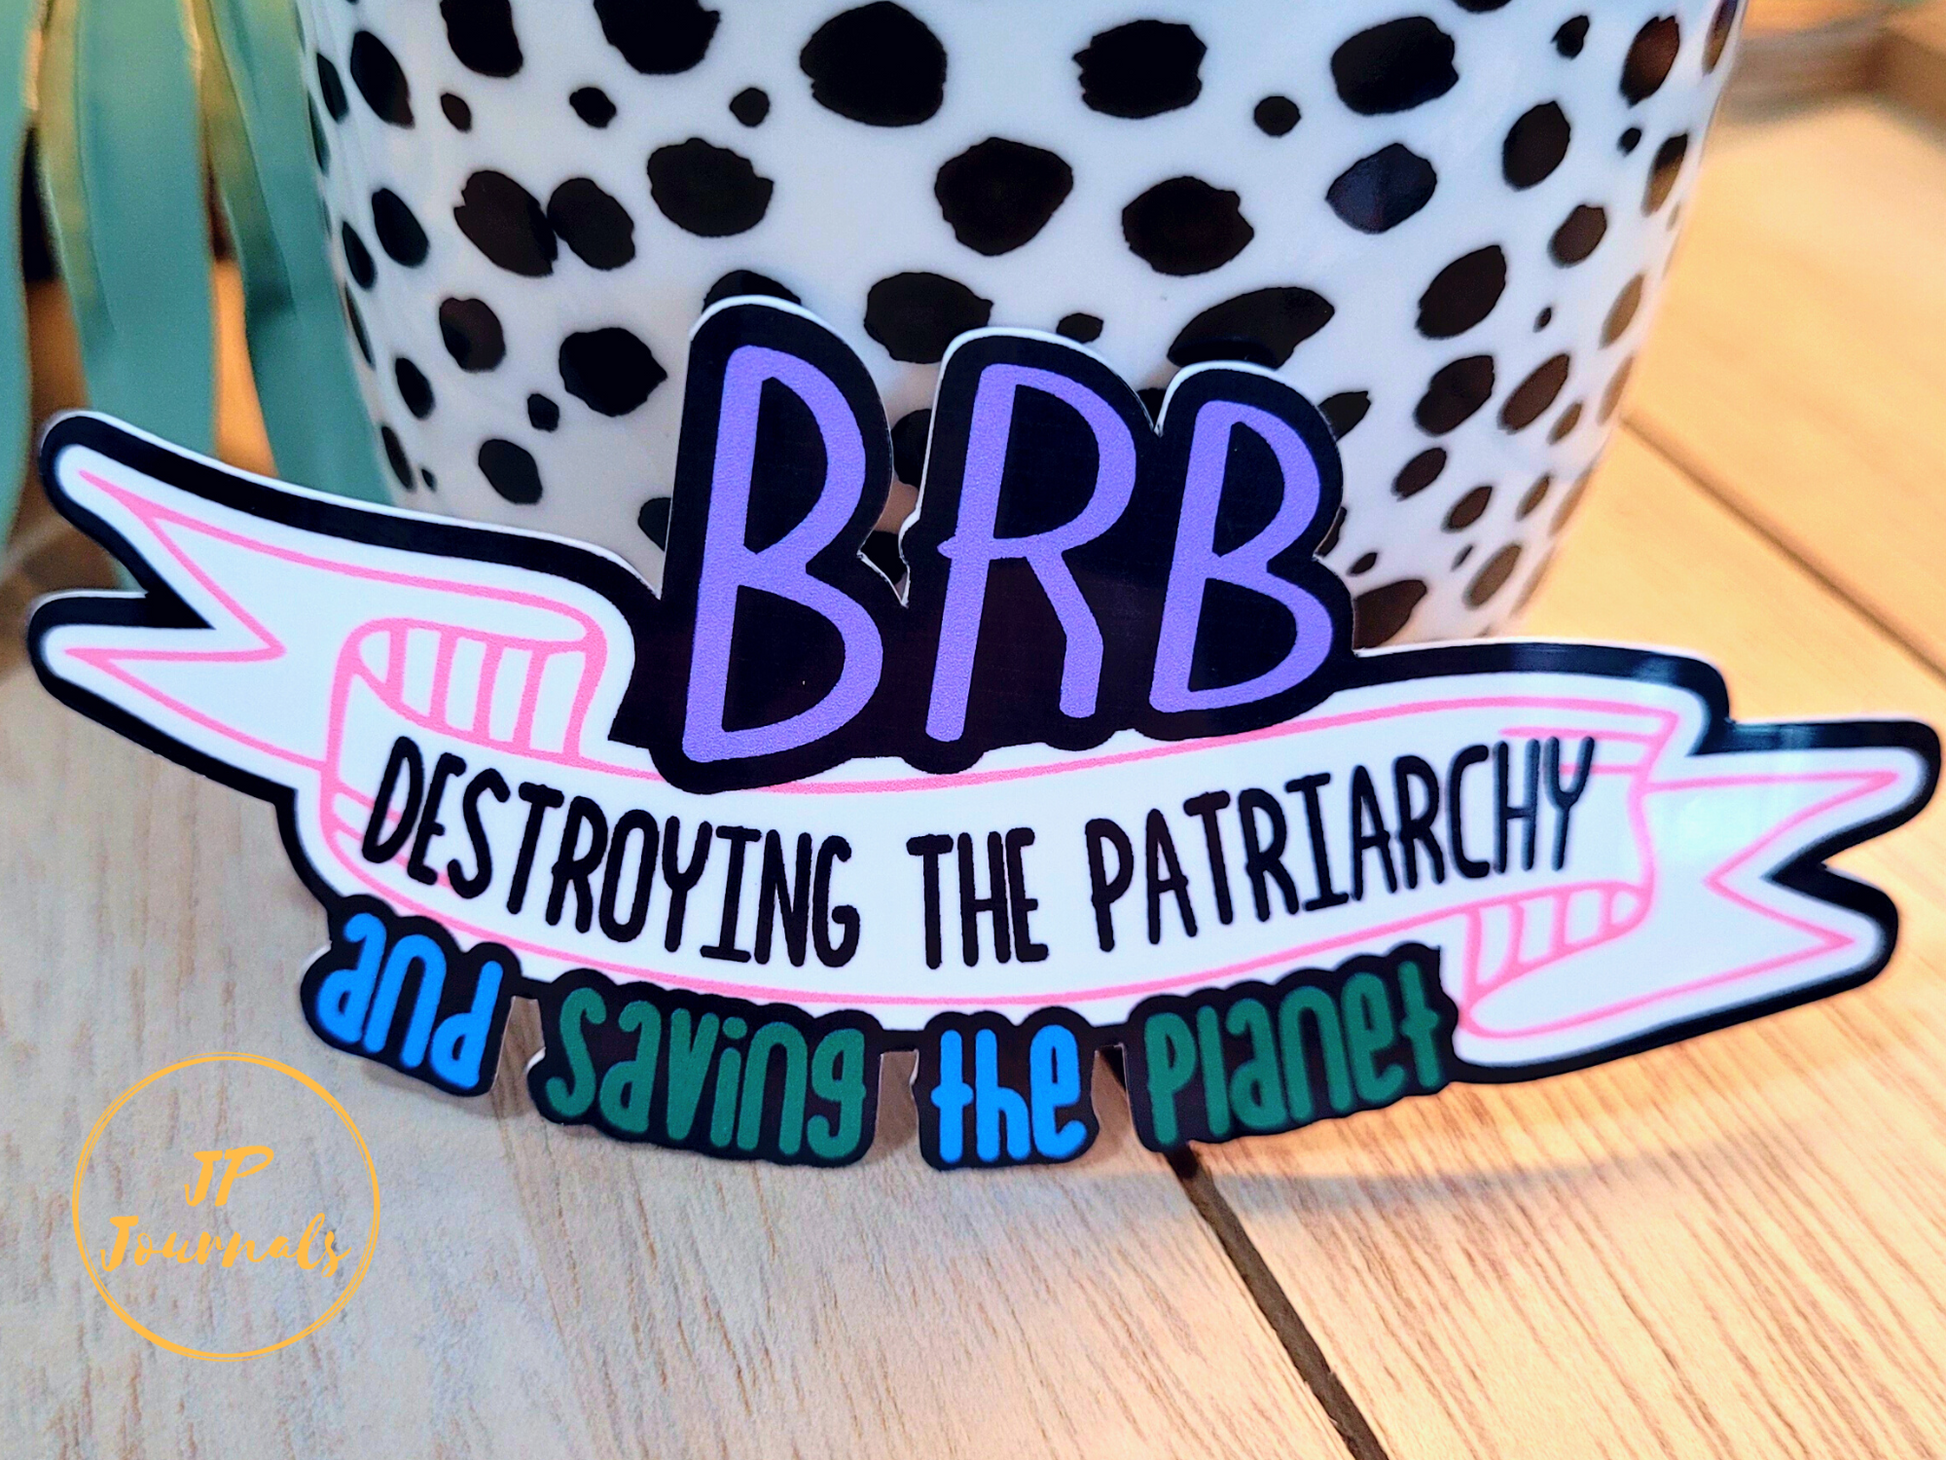 Destroy The Patriarchy Not The Planet Sticker, Feminist Sticker